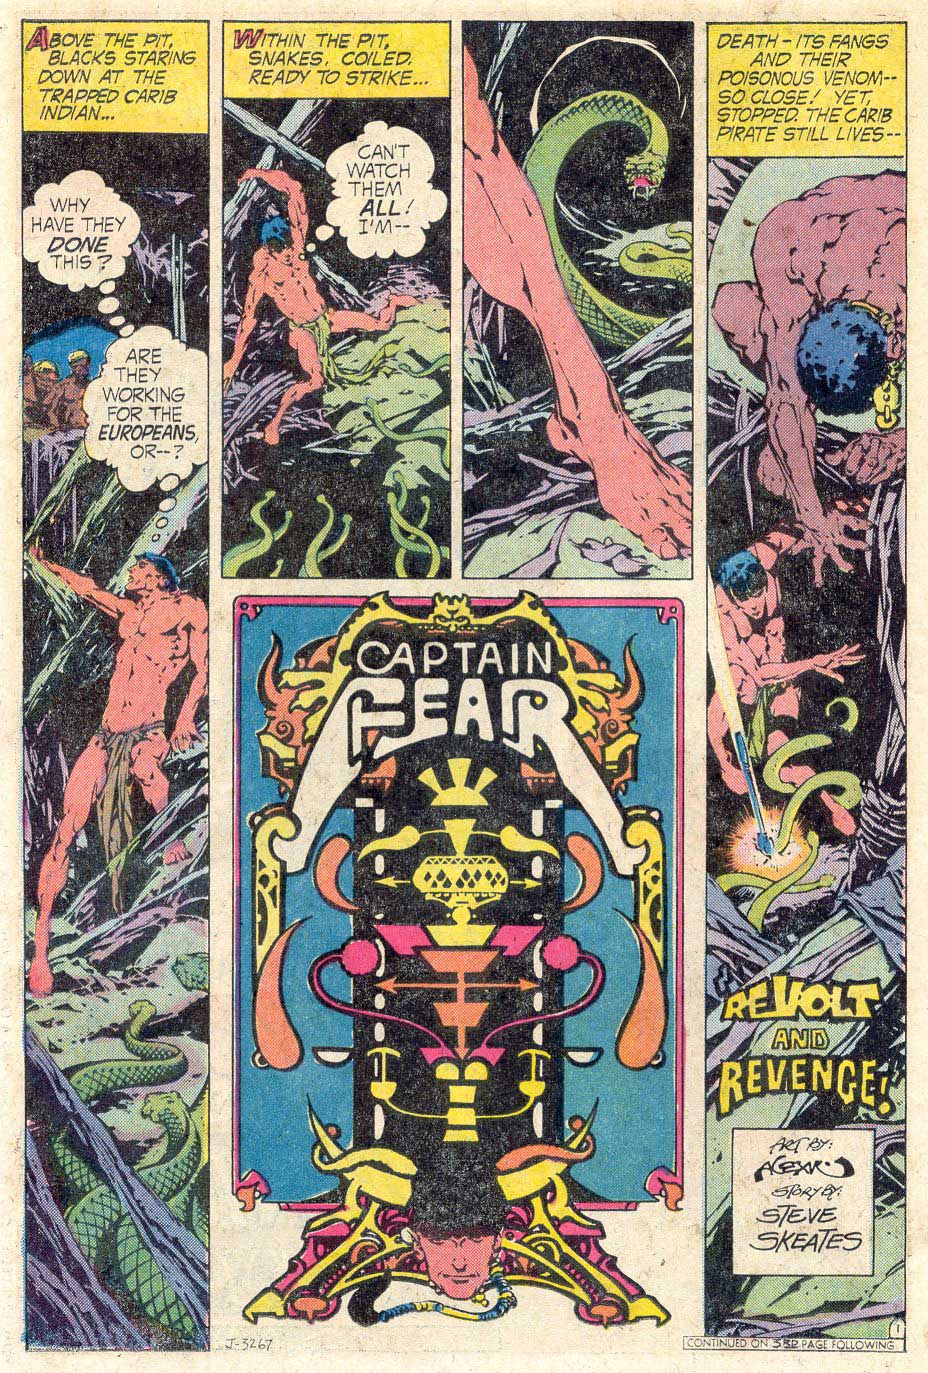 Adventure Comics #433 (1974) by Steve Skeates and Alex Nino